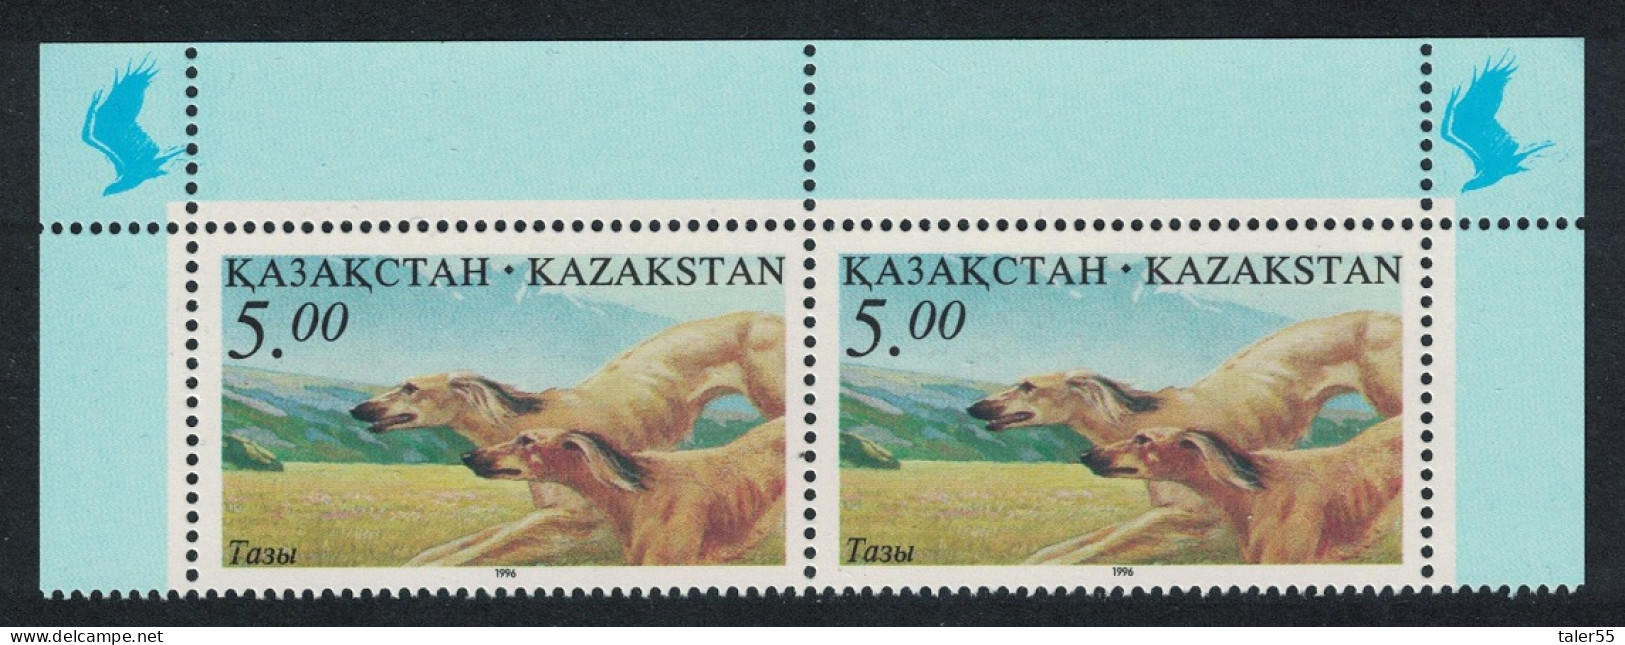 Kazakhstan Hunting Dogs Pair With Birds In Corners 1996 MNH SG#140 - Kazakhstan